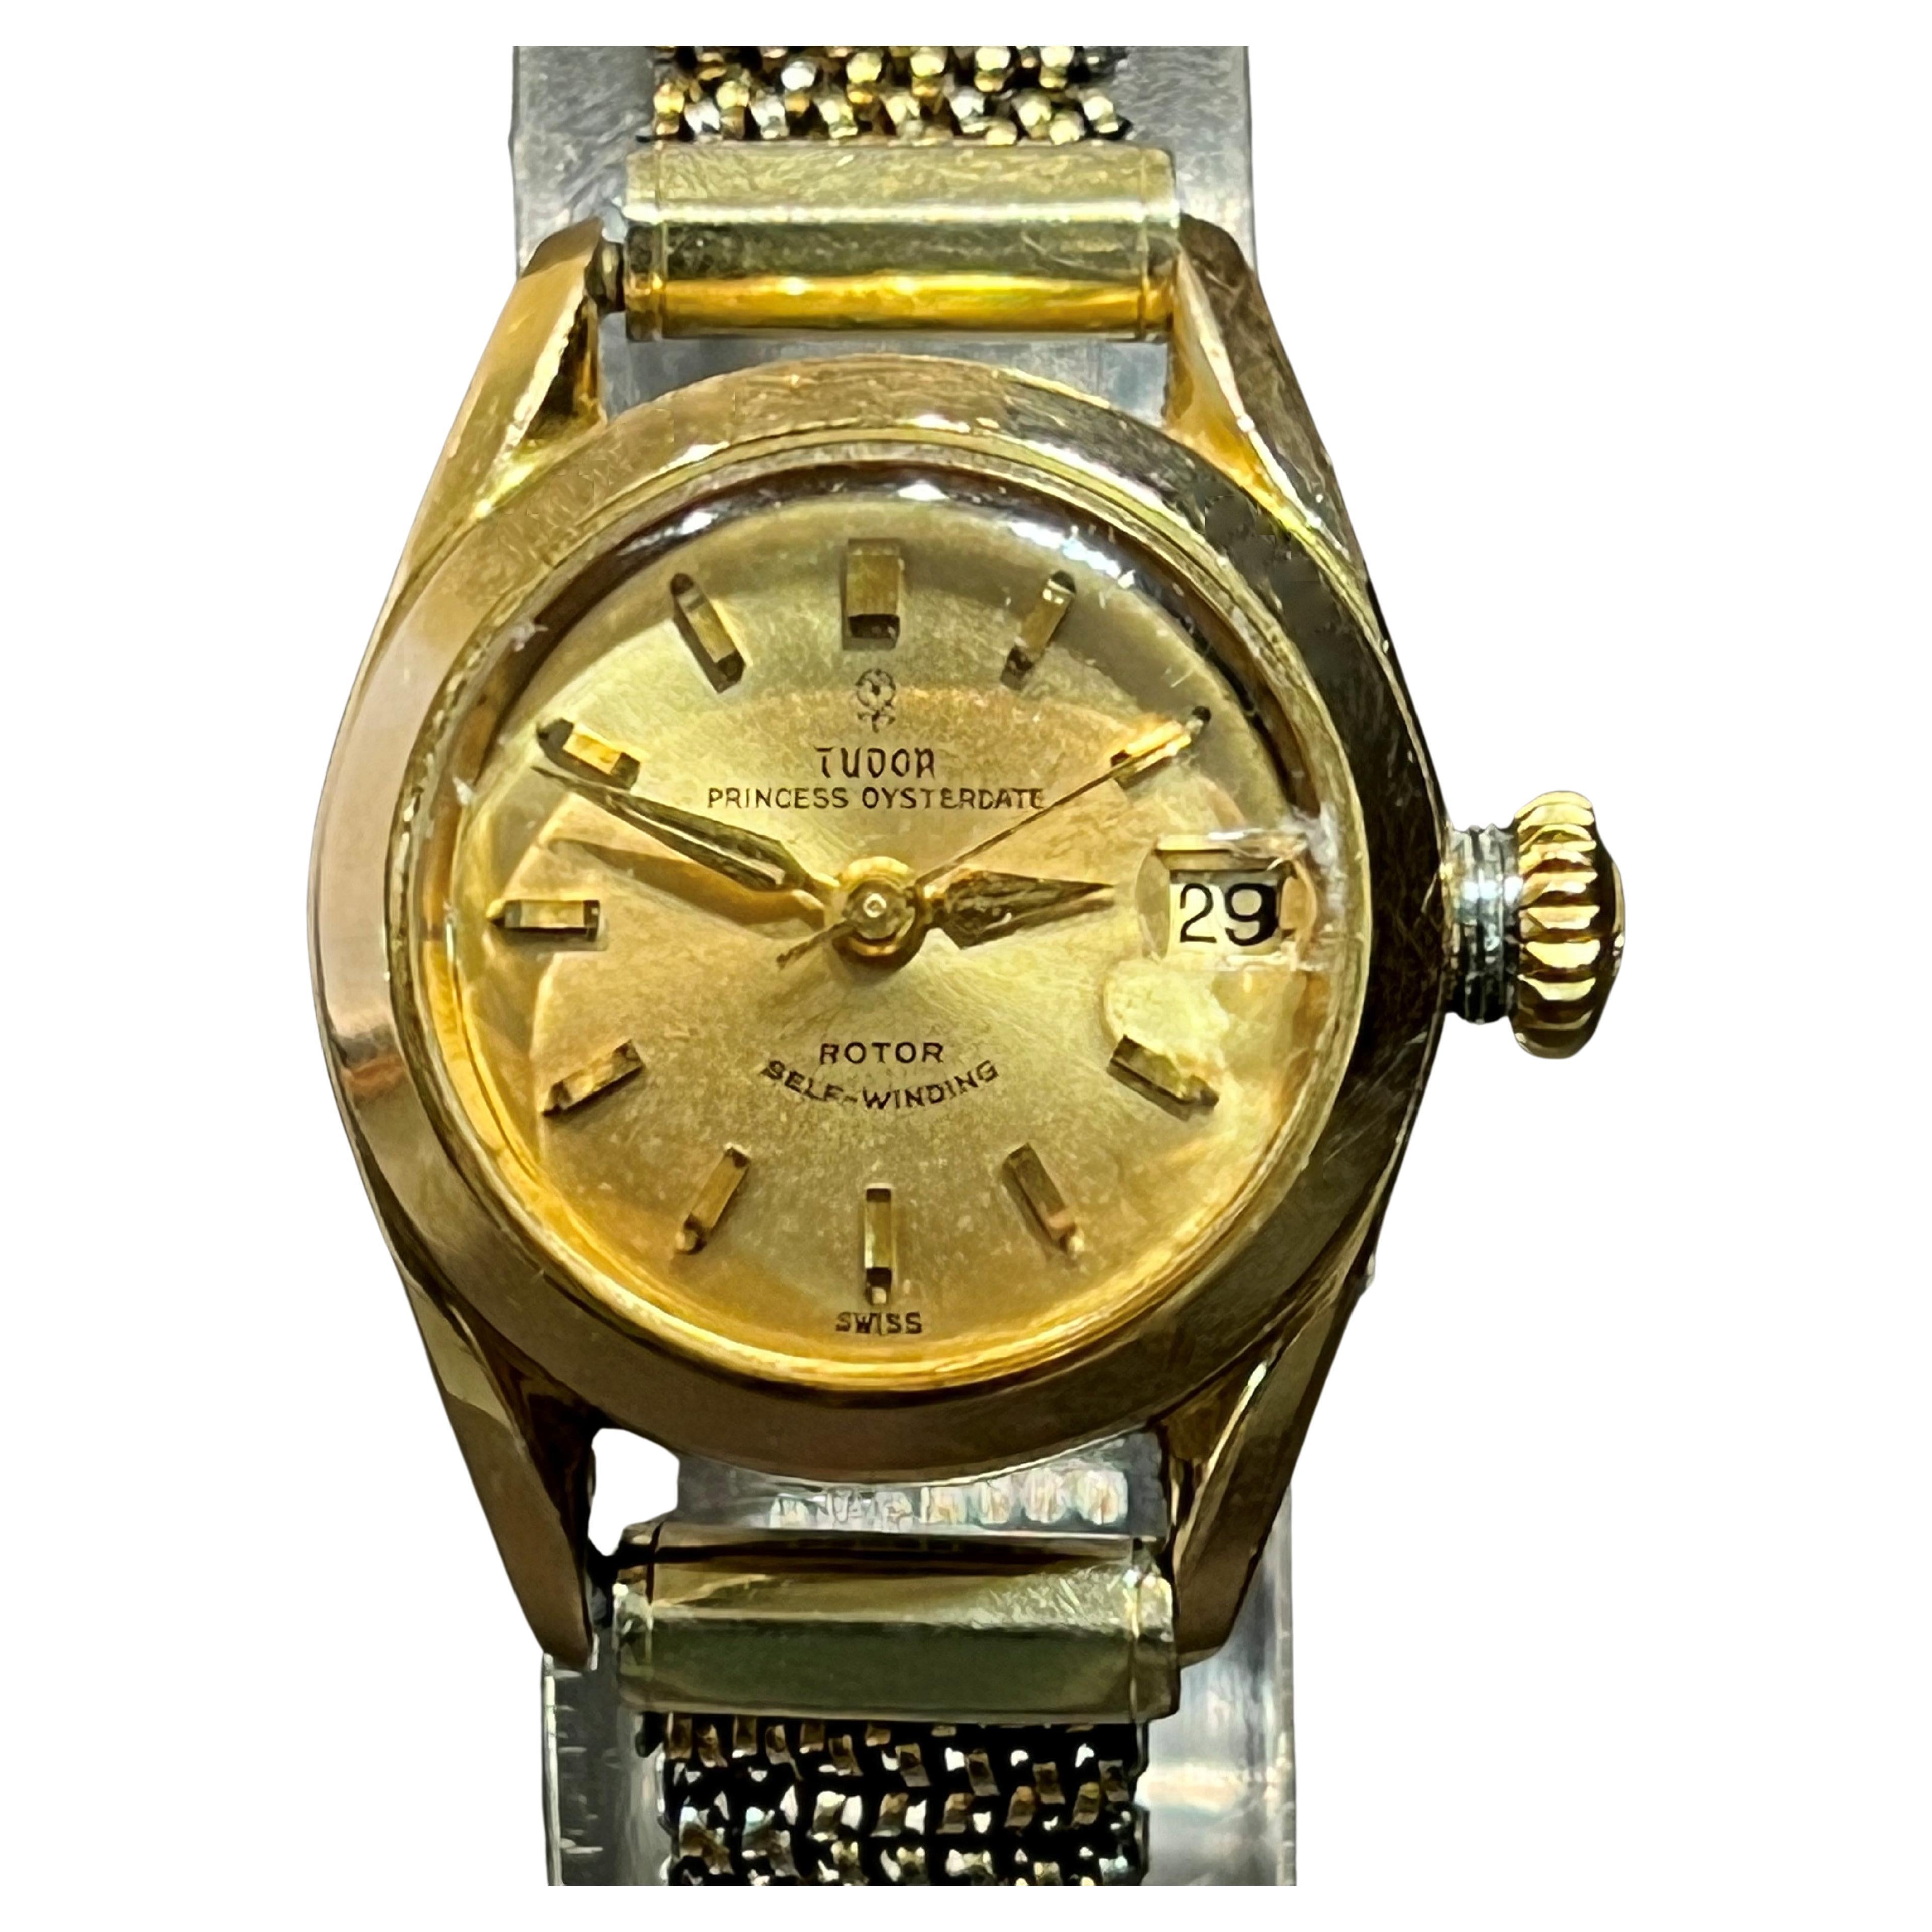 1966 Rolex Tudor Oyster Princess Gold Wristwatch For Sale